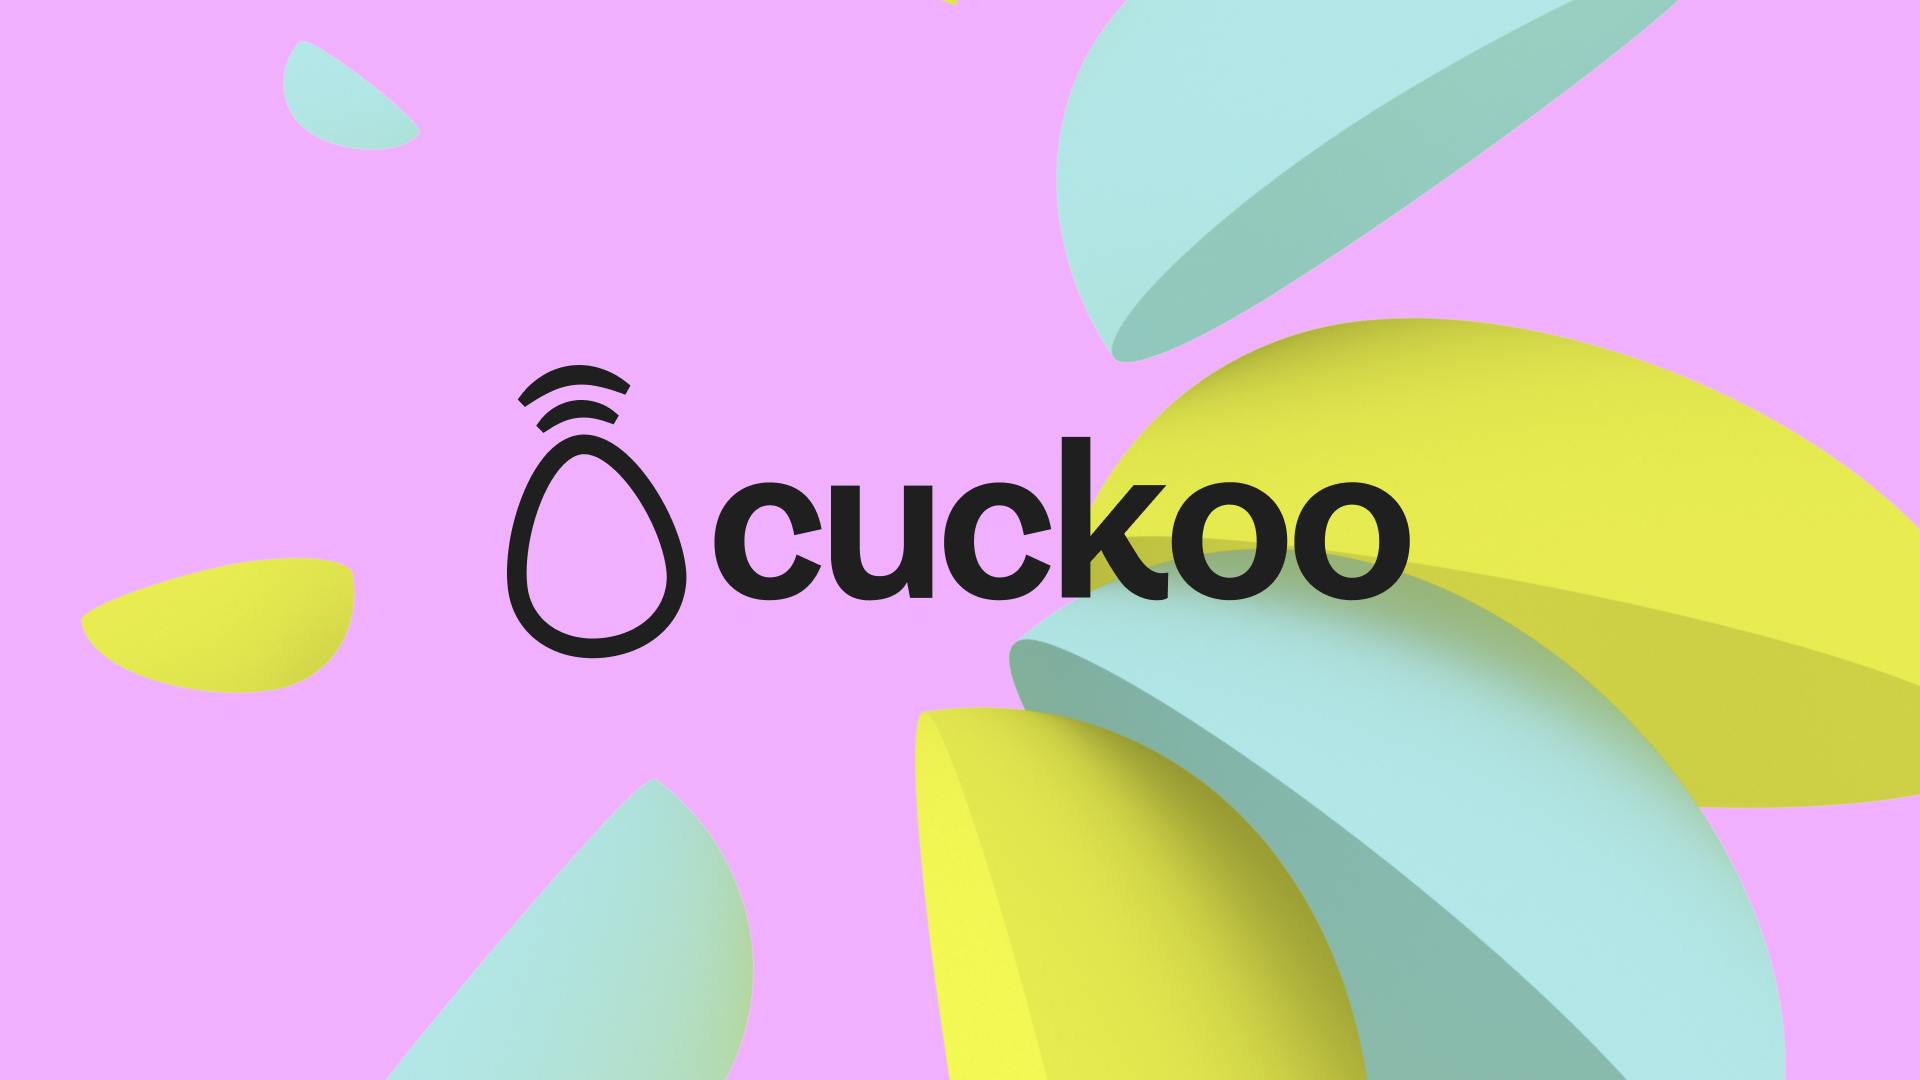 Cuckoo Broadband's new brand